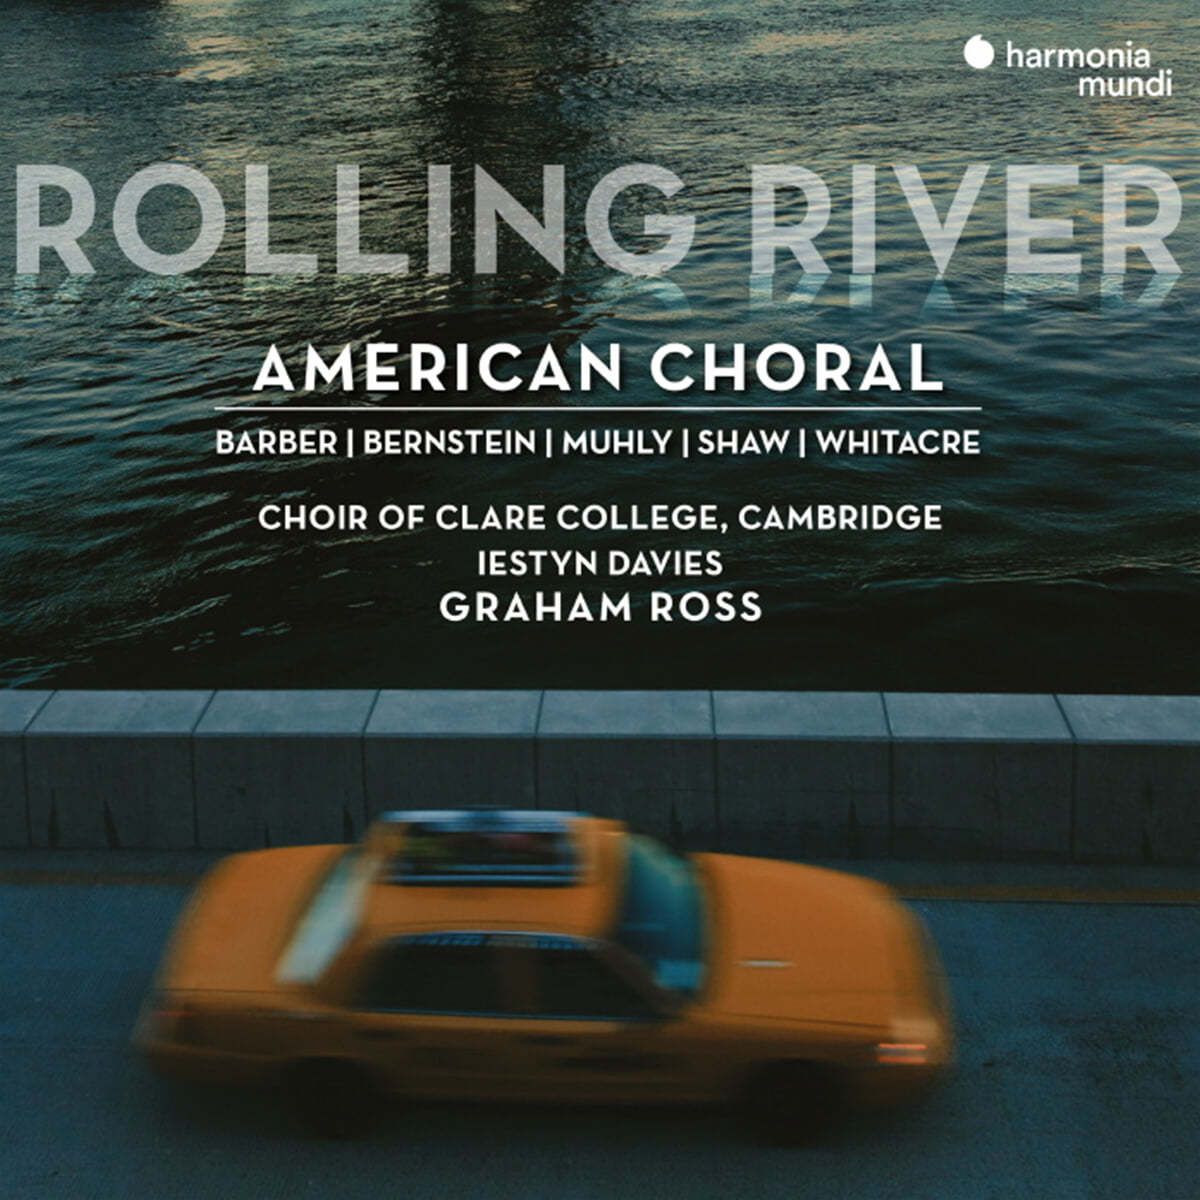 Graham Ross 아메리칸 합창 모음집 (Rolling River - American Choral)